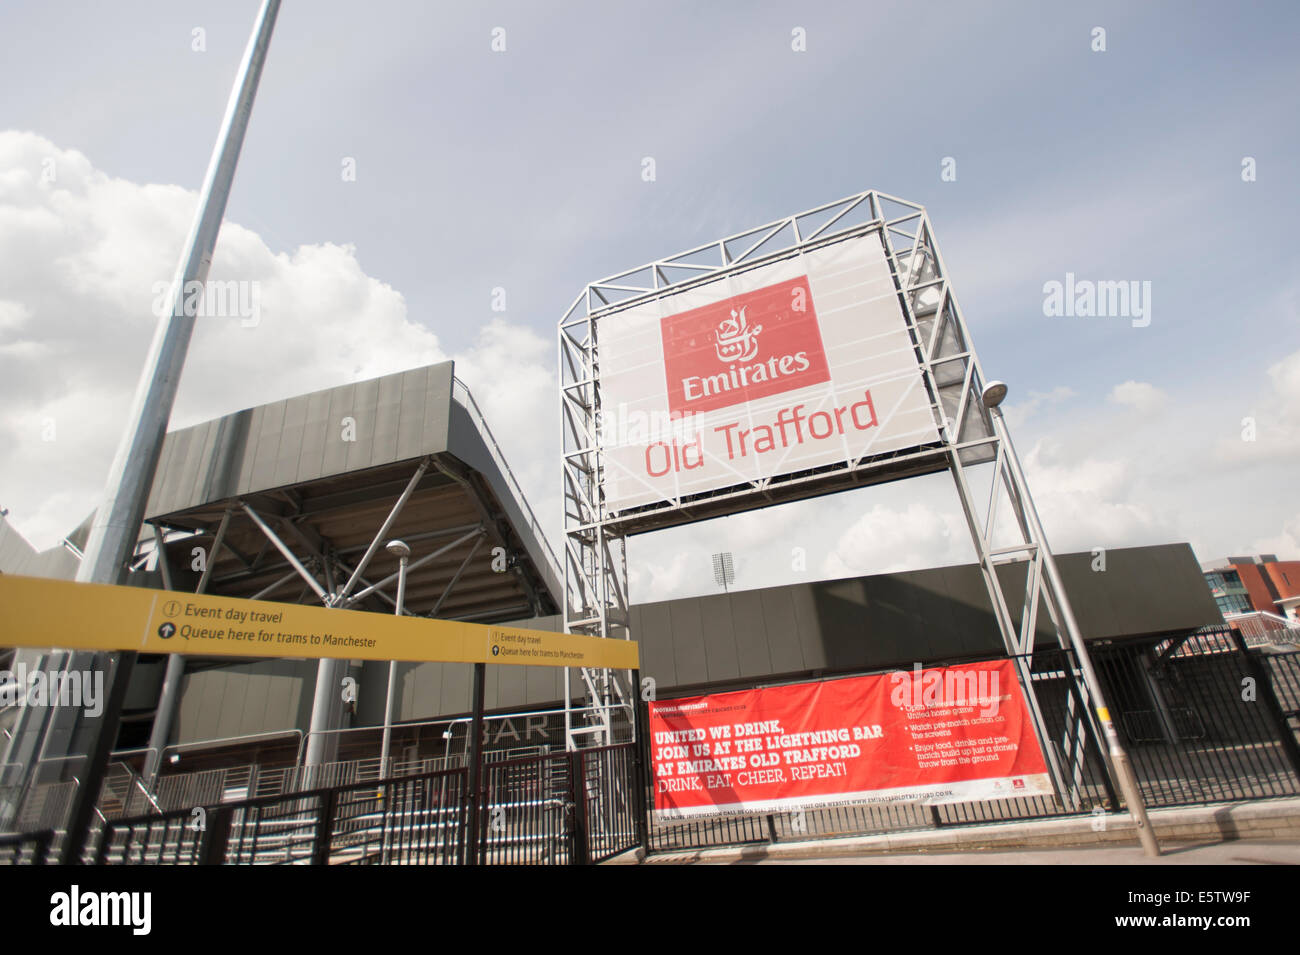 Emirate Old Trafford. Lancashire County Cricket Ground. Stockfoto